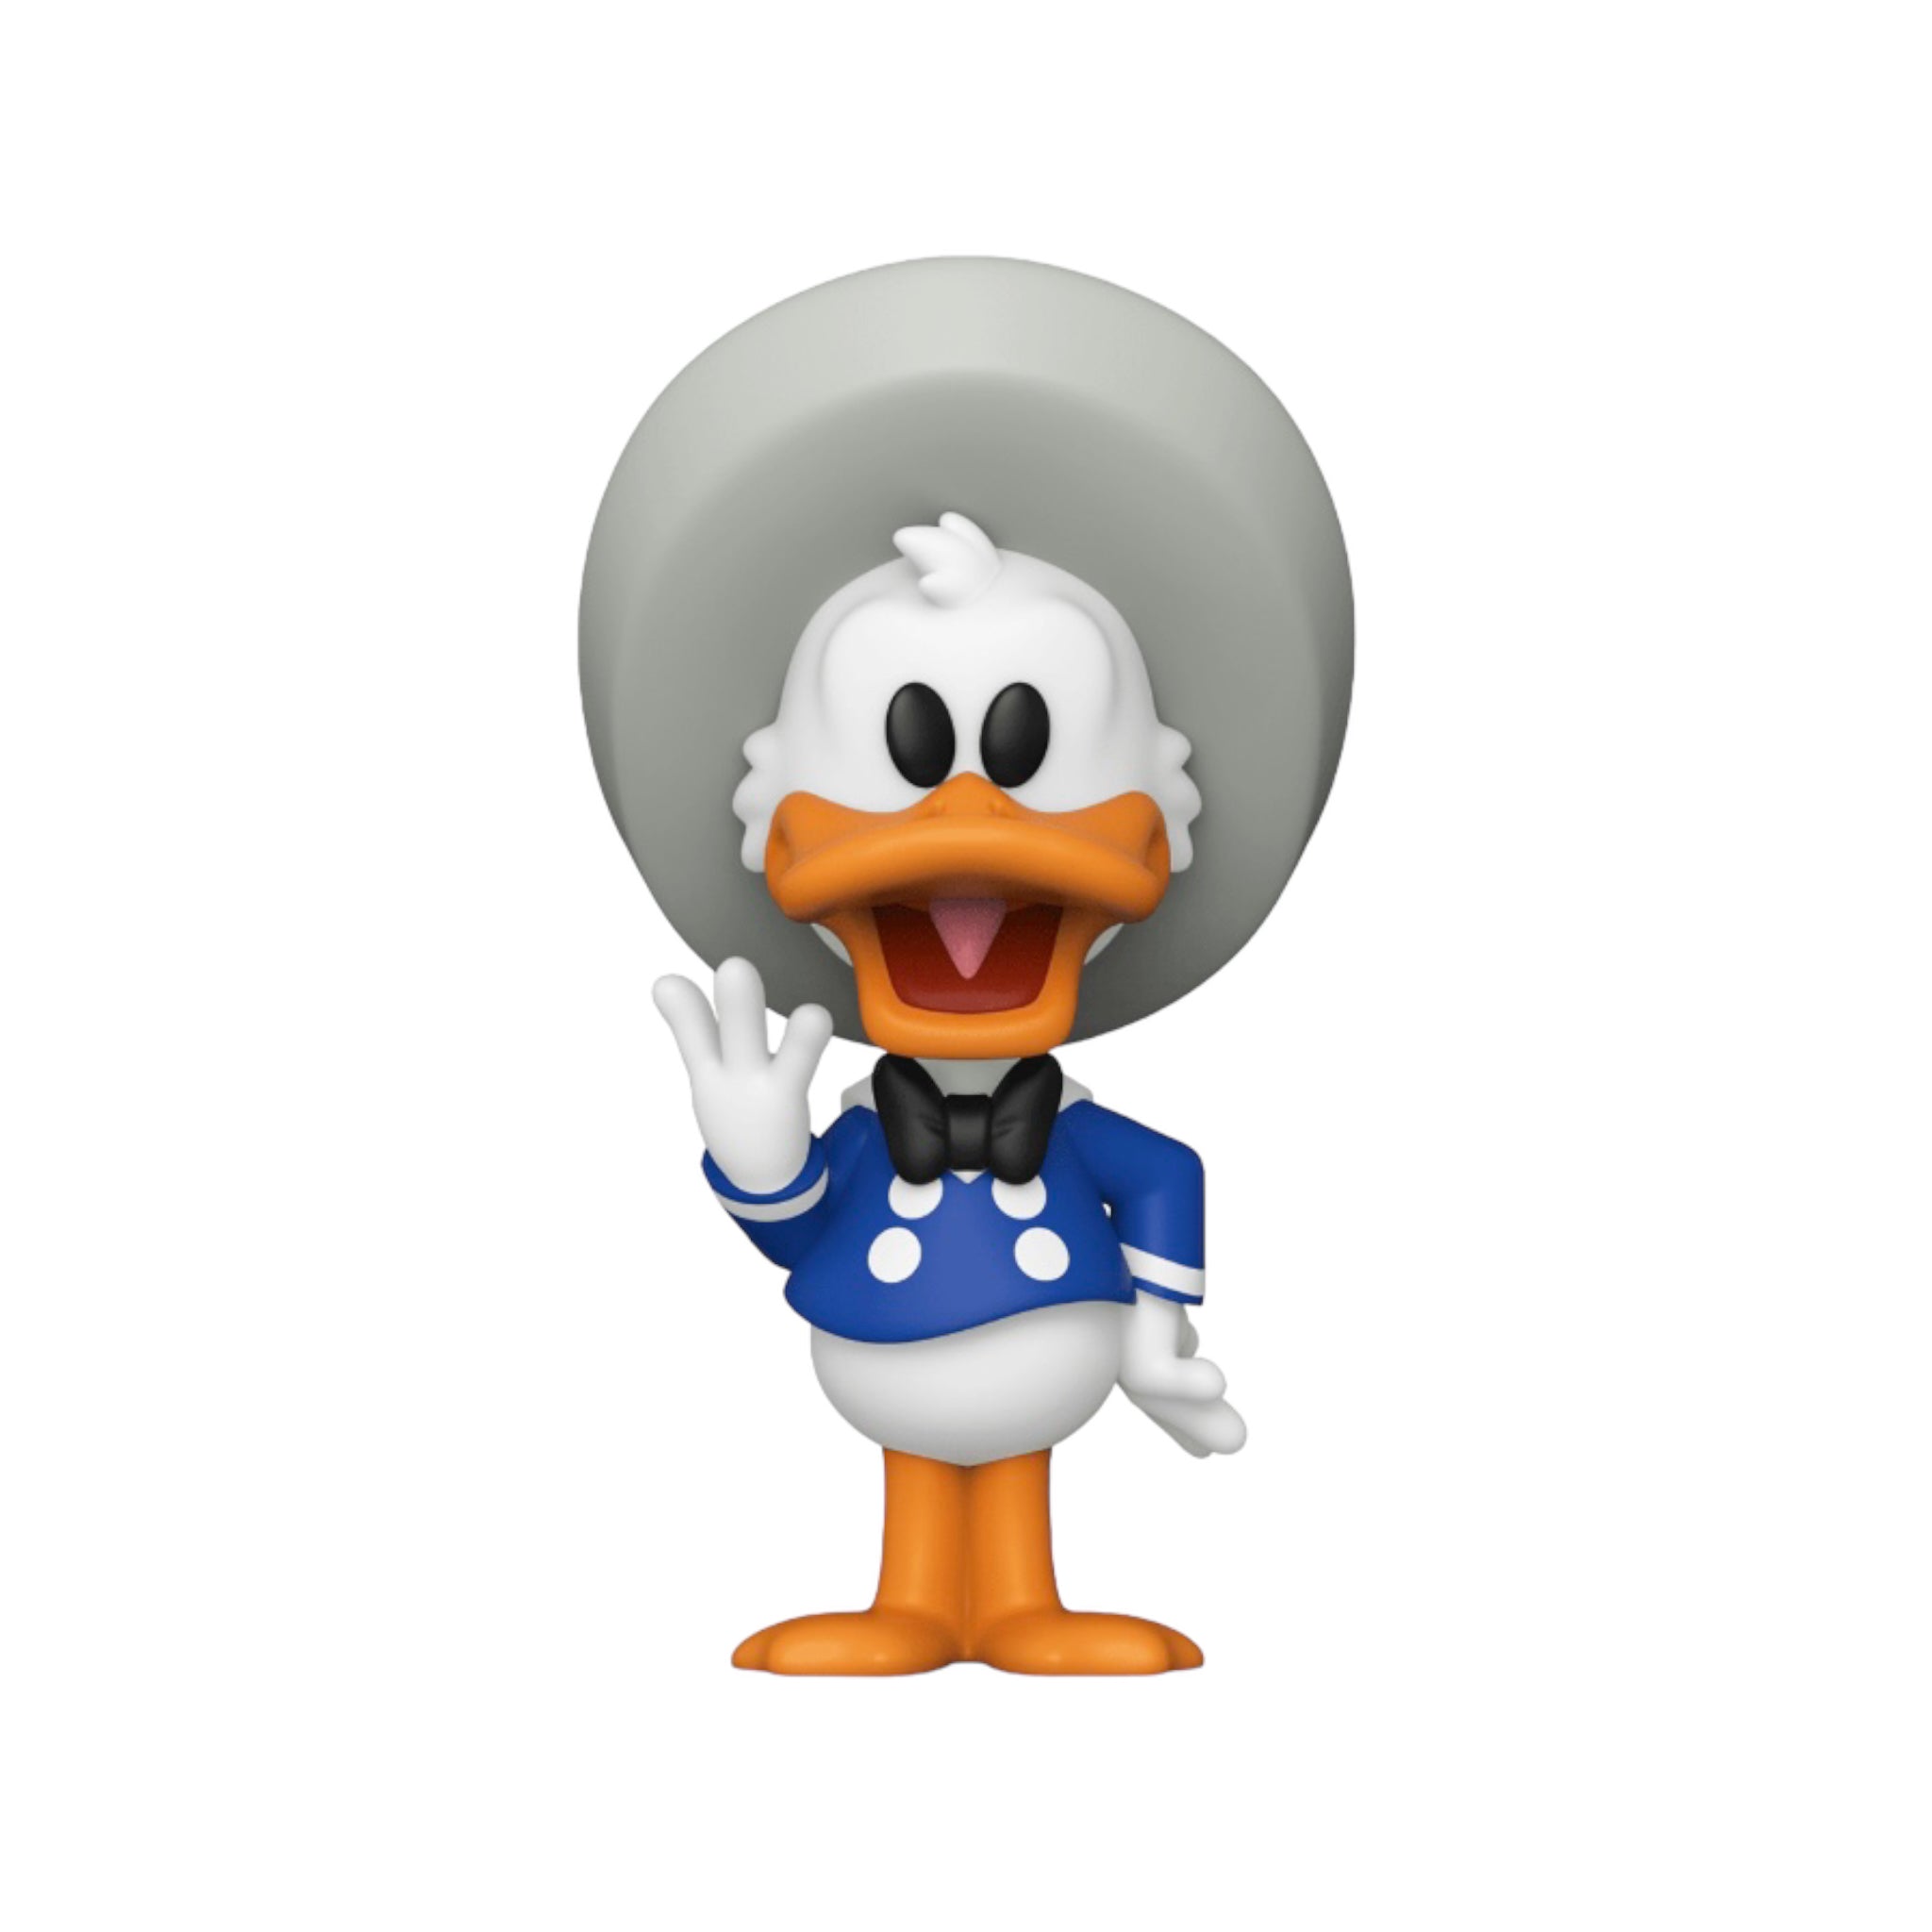 Donald Duck (3 Caballeros) Funko Soda Vinyl Figure! - Disney - International LE12000 Pcs - Chance of Chase